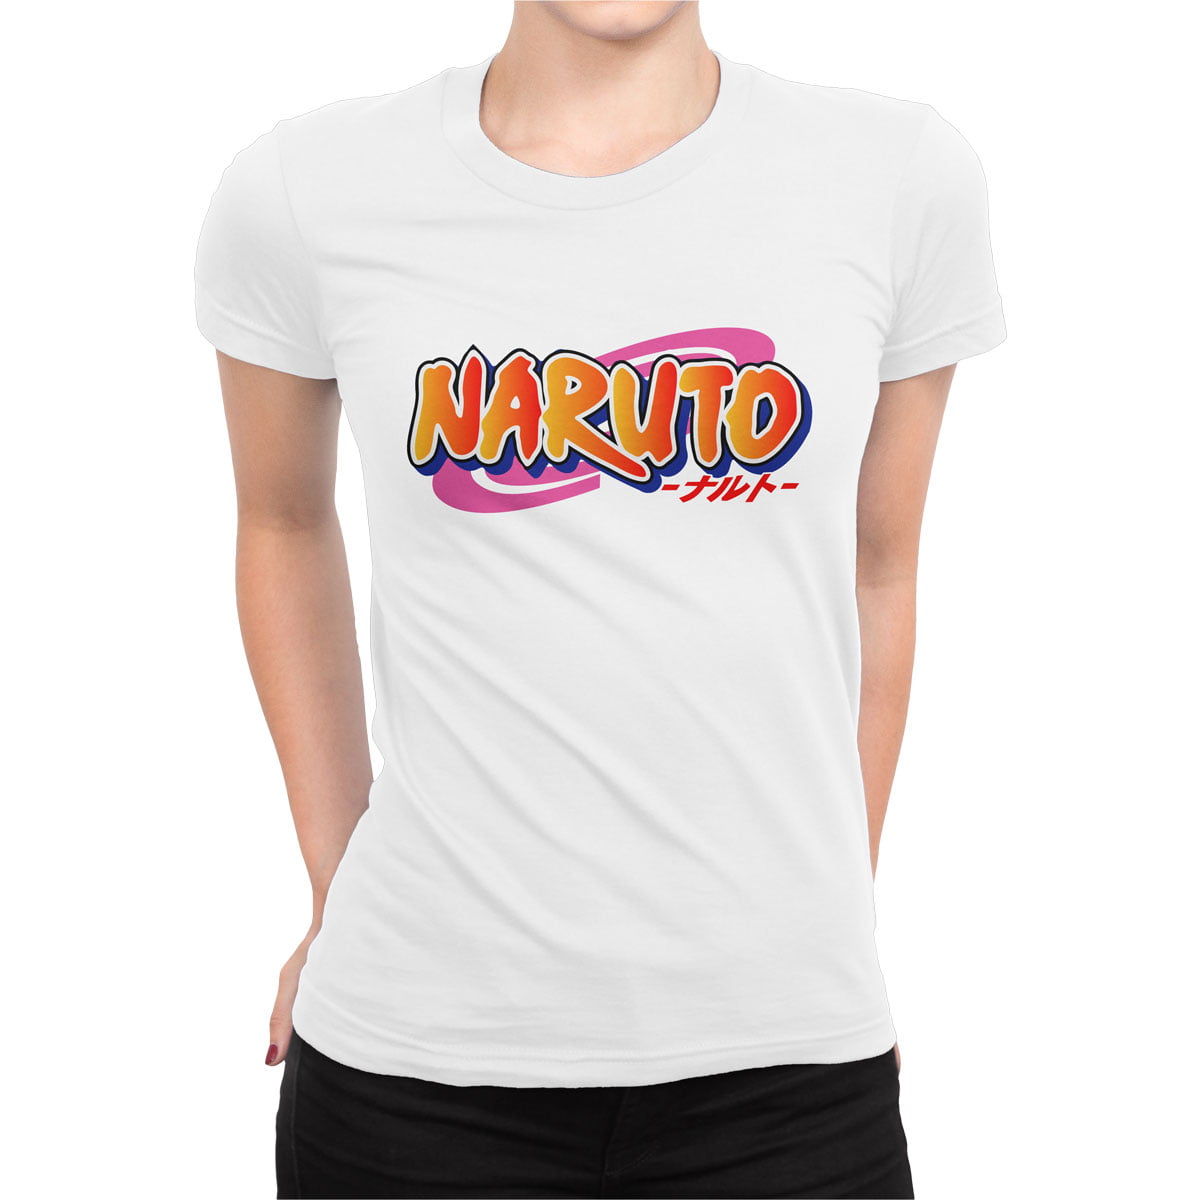 Naruto uzumaki logo no3 tisort kadin b - naruto uzumaki logo baskılı kadın t-shirt - figurex